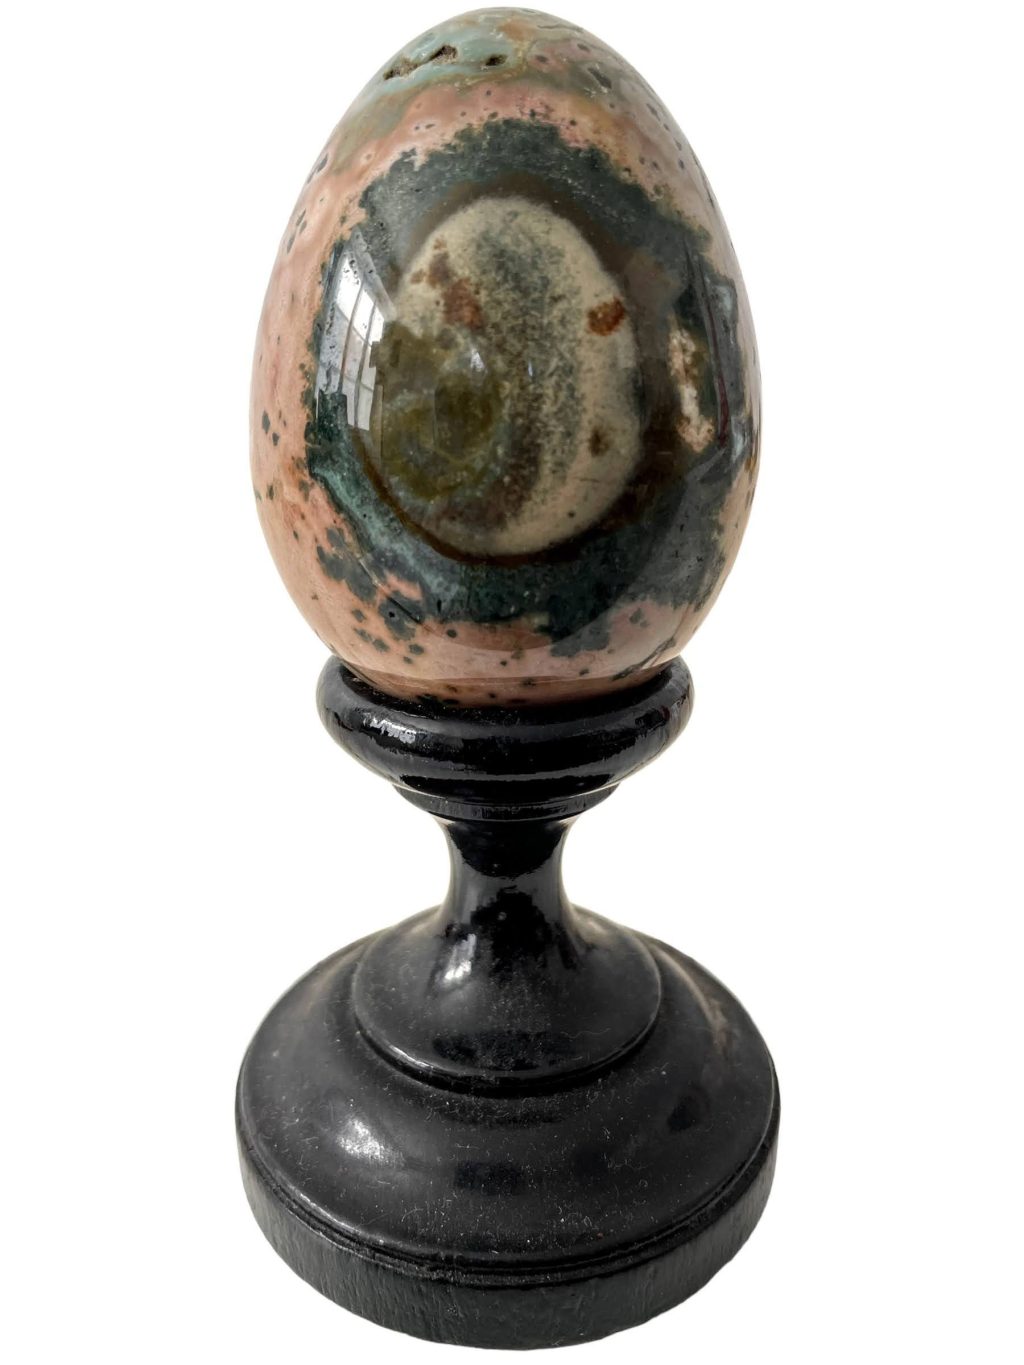 Vintage French Jasper Stone Egg Ornament On Stand Figurine Kitchen Display Piece Prop c1960-70’s